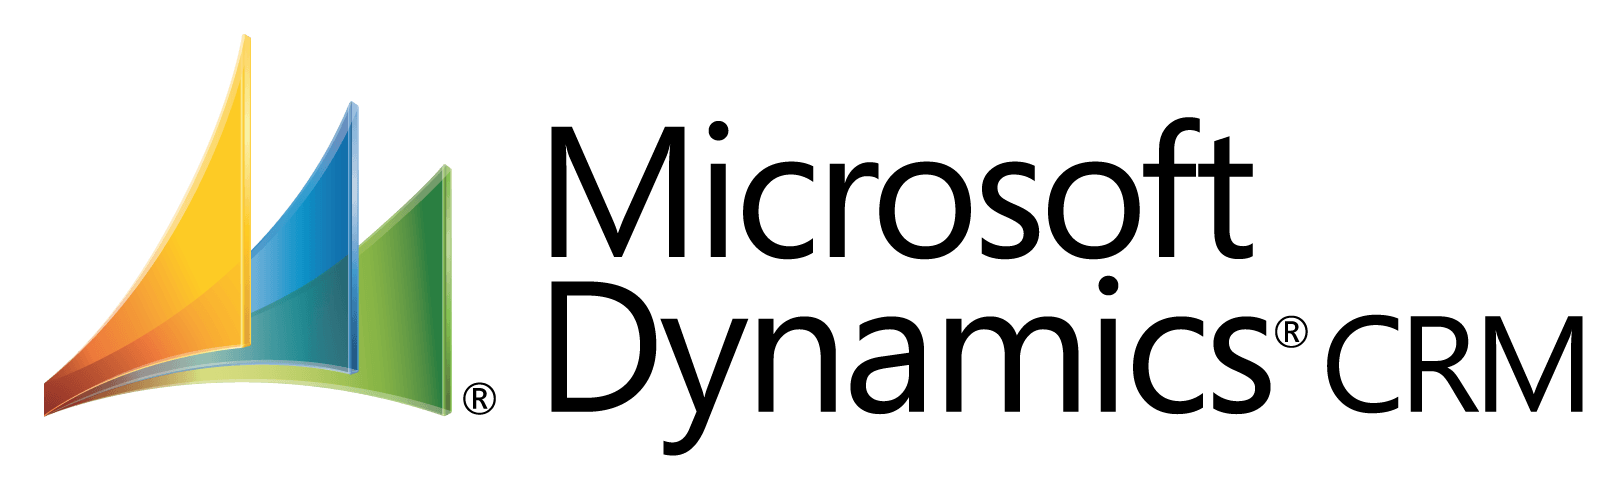 Microsoft Dynamics CRM 2013 Logo - Image - Dynamics-crm.png | Logopedia | FANDOM powered by Wikia